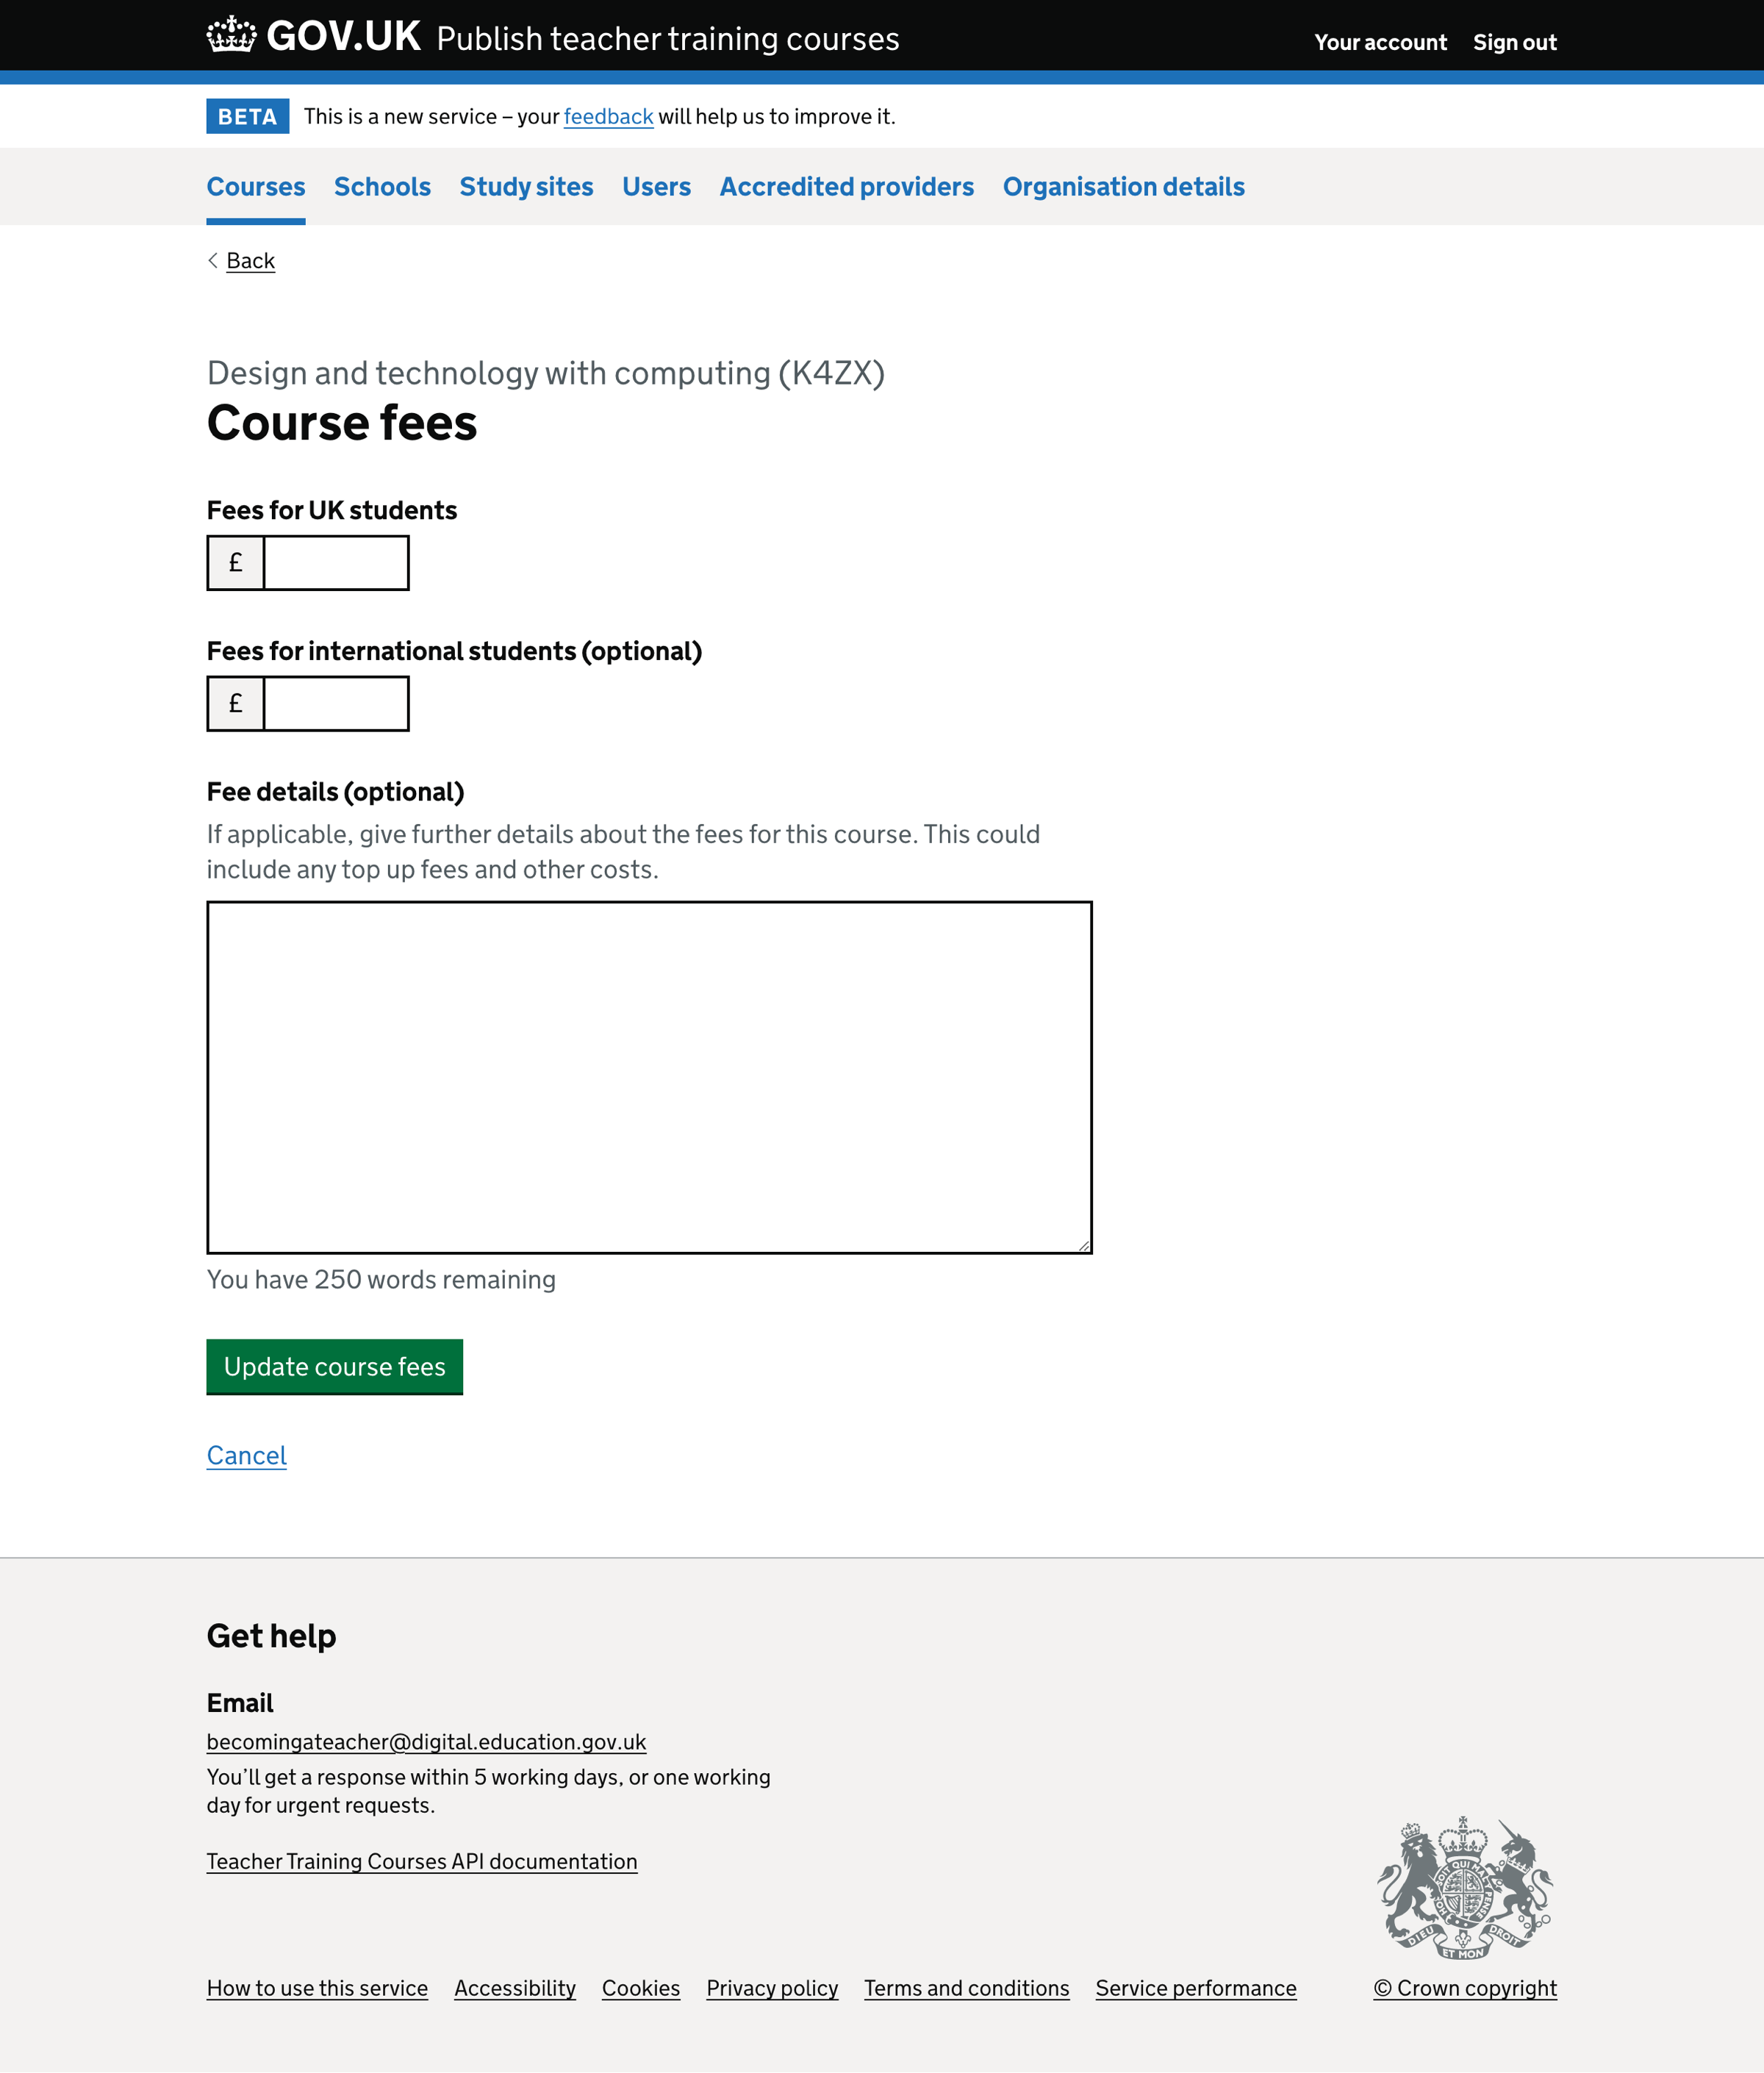 Screenshot of Course fees - optional international fees